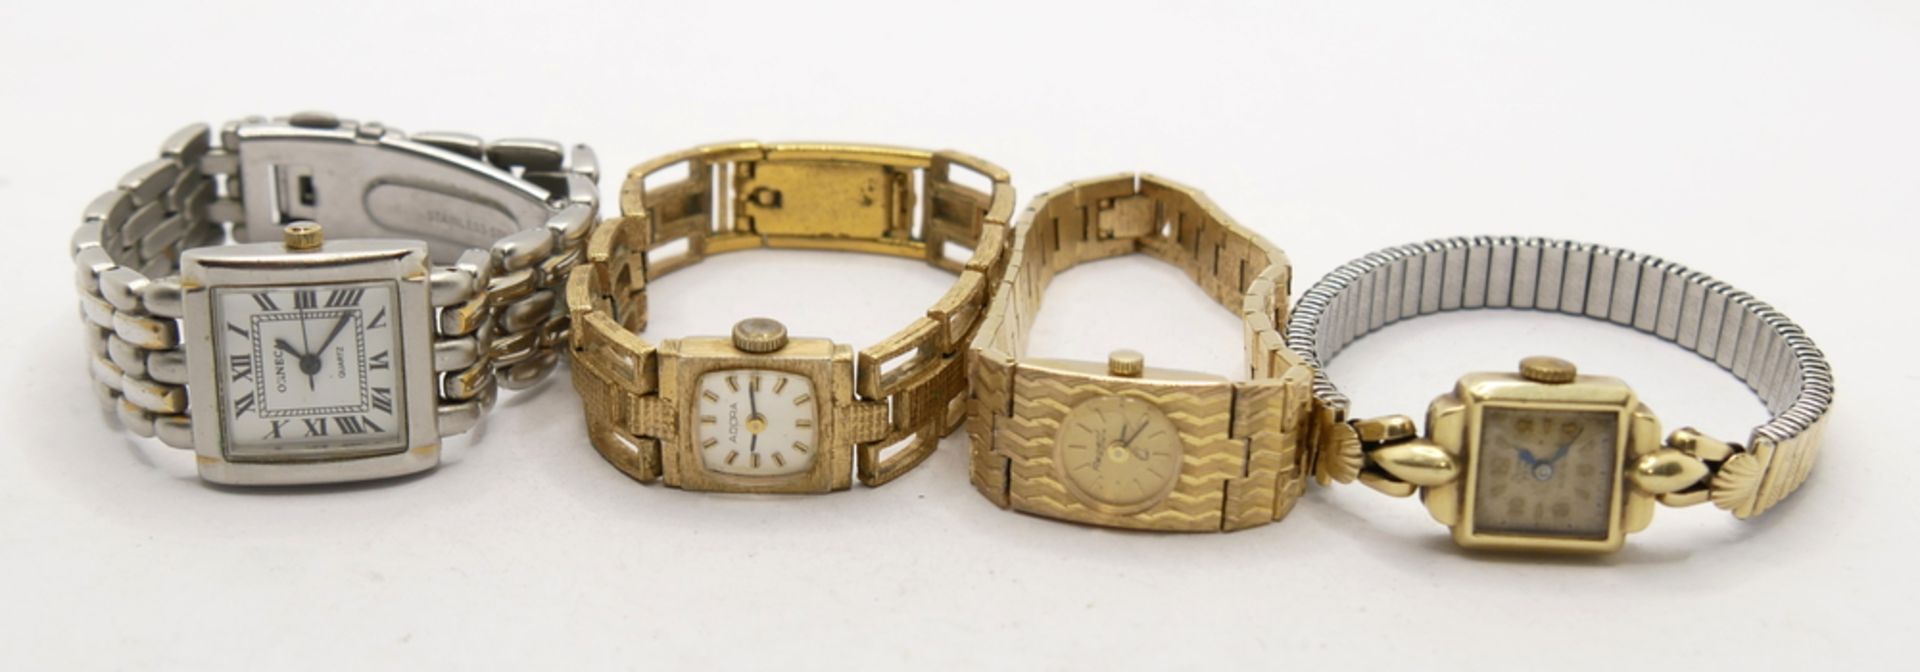 Lot Damen Armbanduhren dabei z.B. Orneca Regent etc. insgesamt 4 Stück.